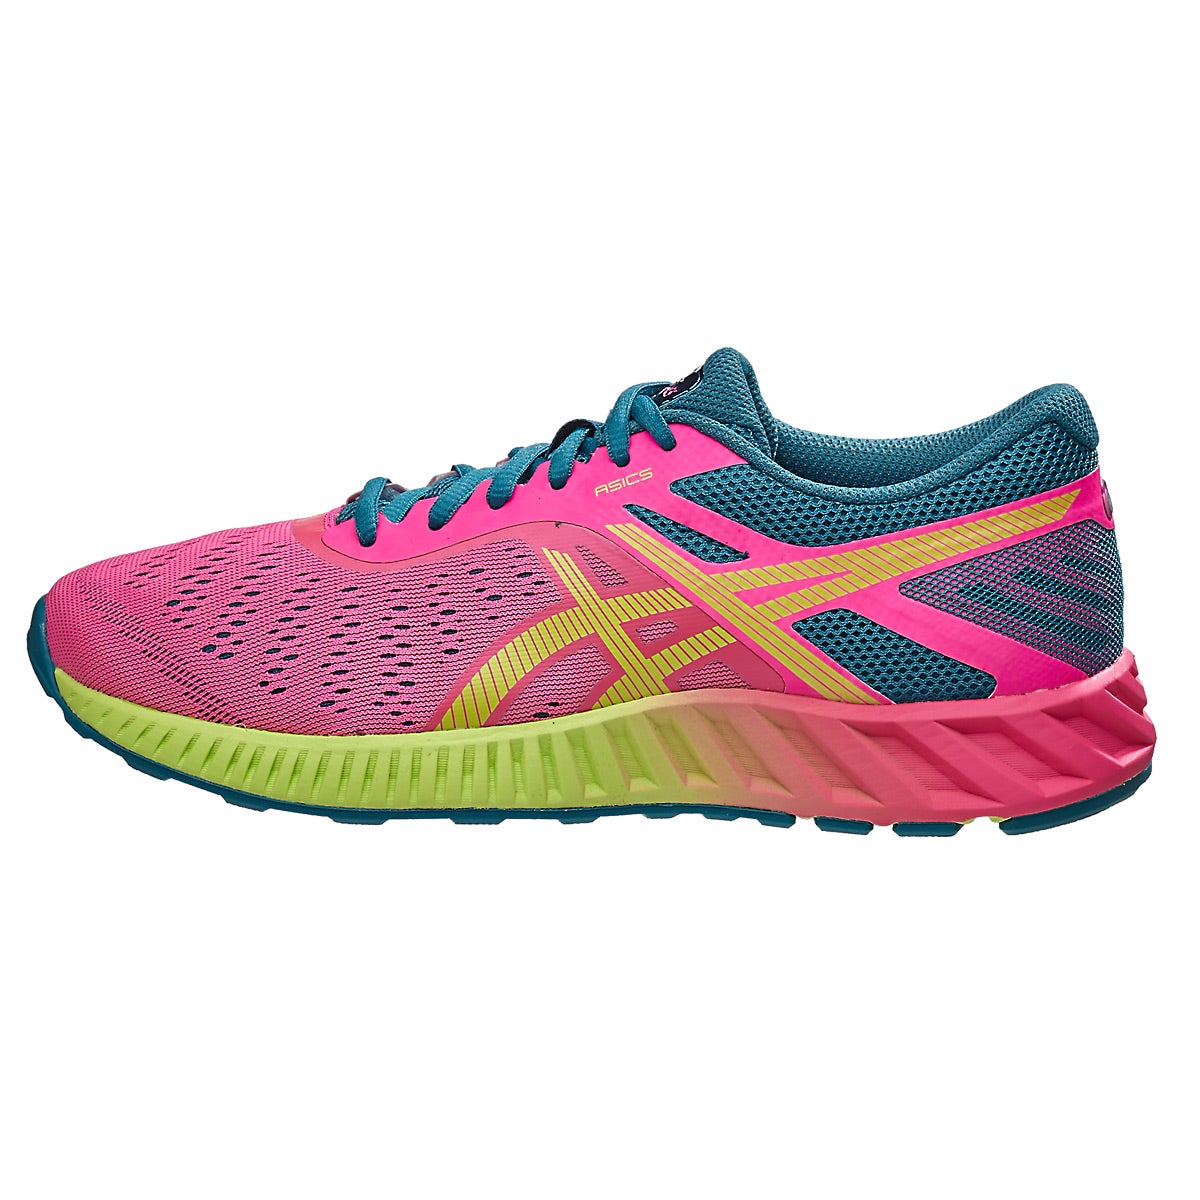 ASICS FuzeX Lyte Women's Shoes Pink/Green/Ocean 360° View | Running ...